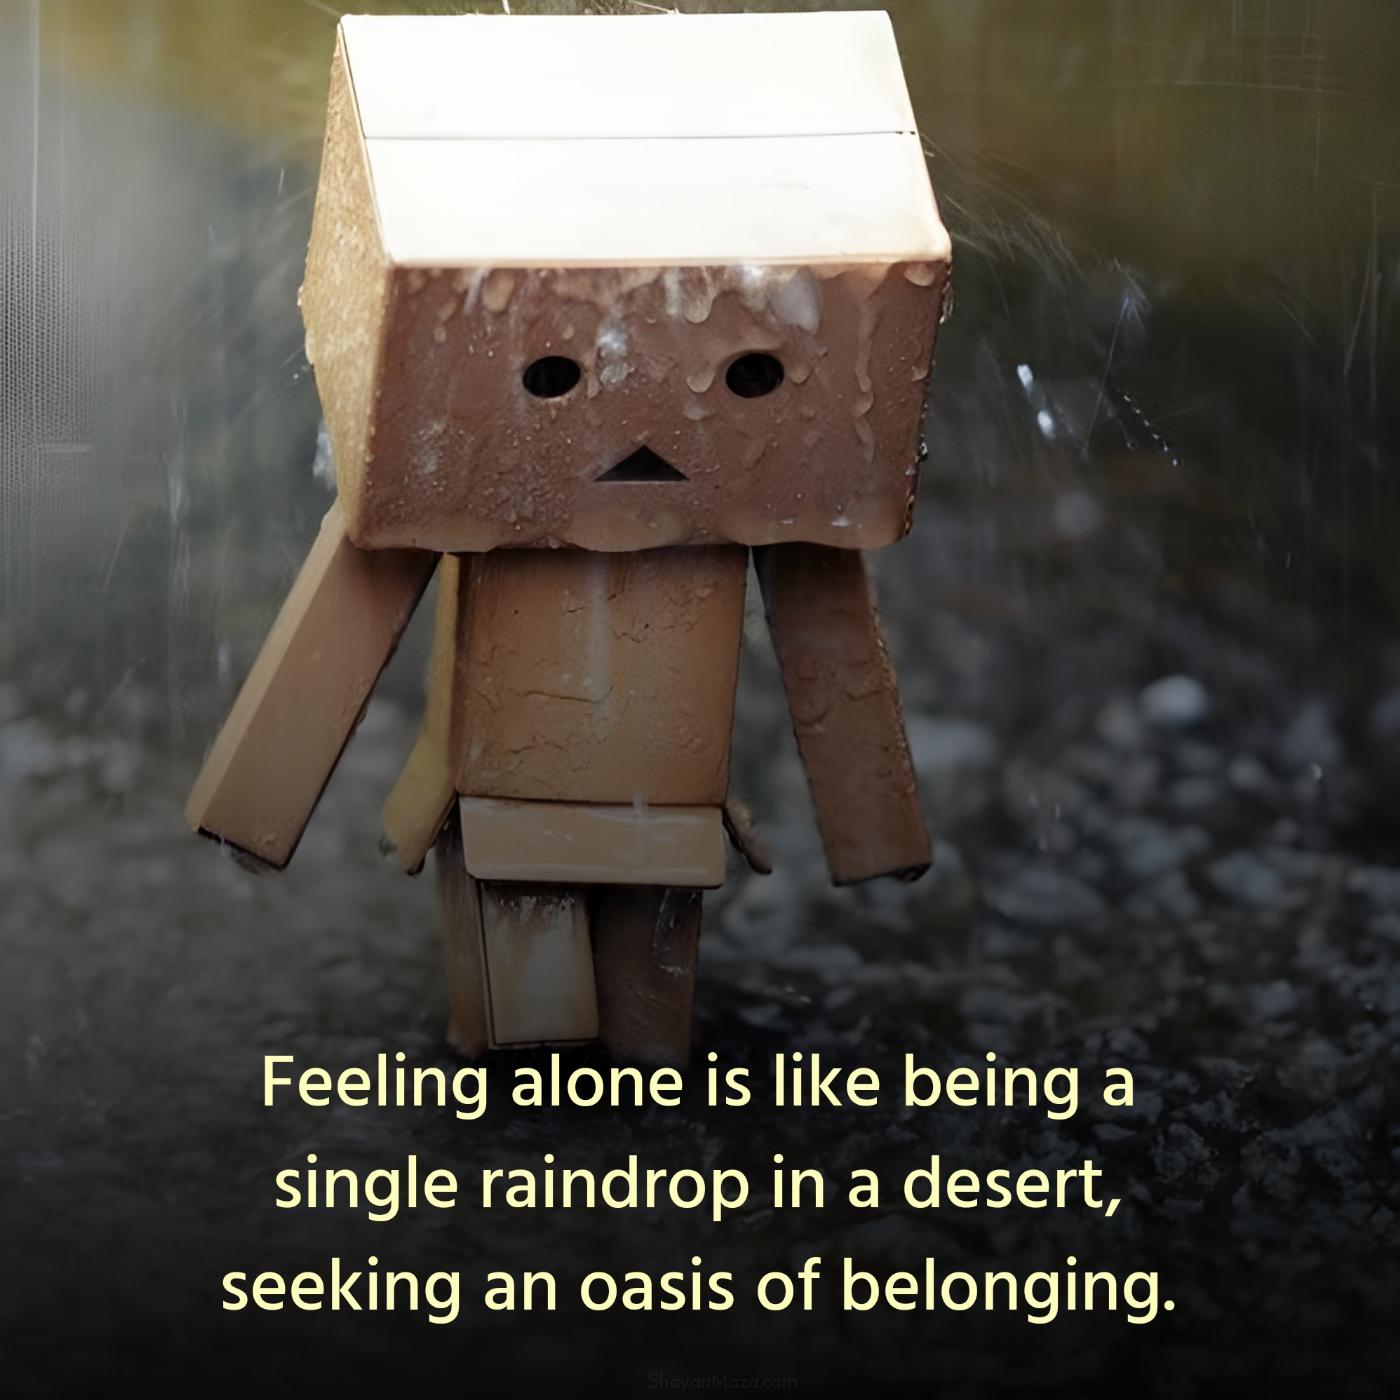 Feeling alone is like being a single raindrop in a desert